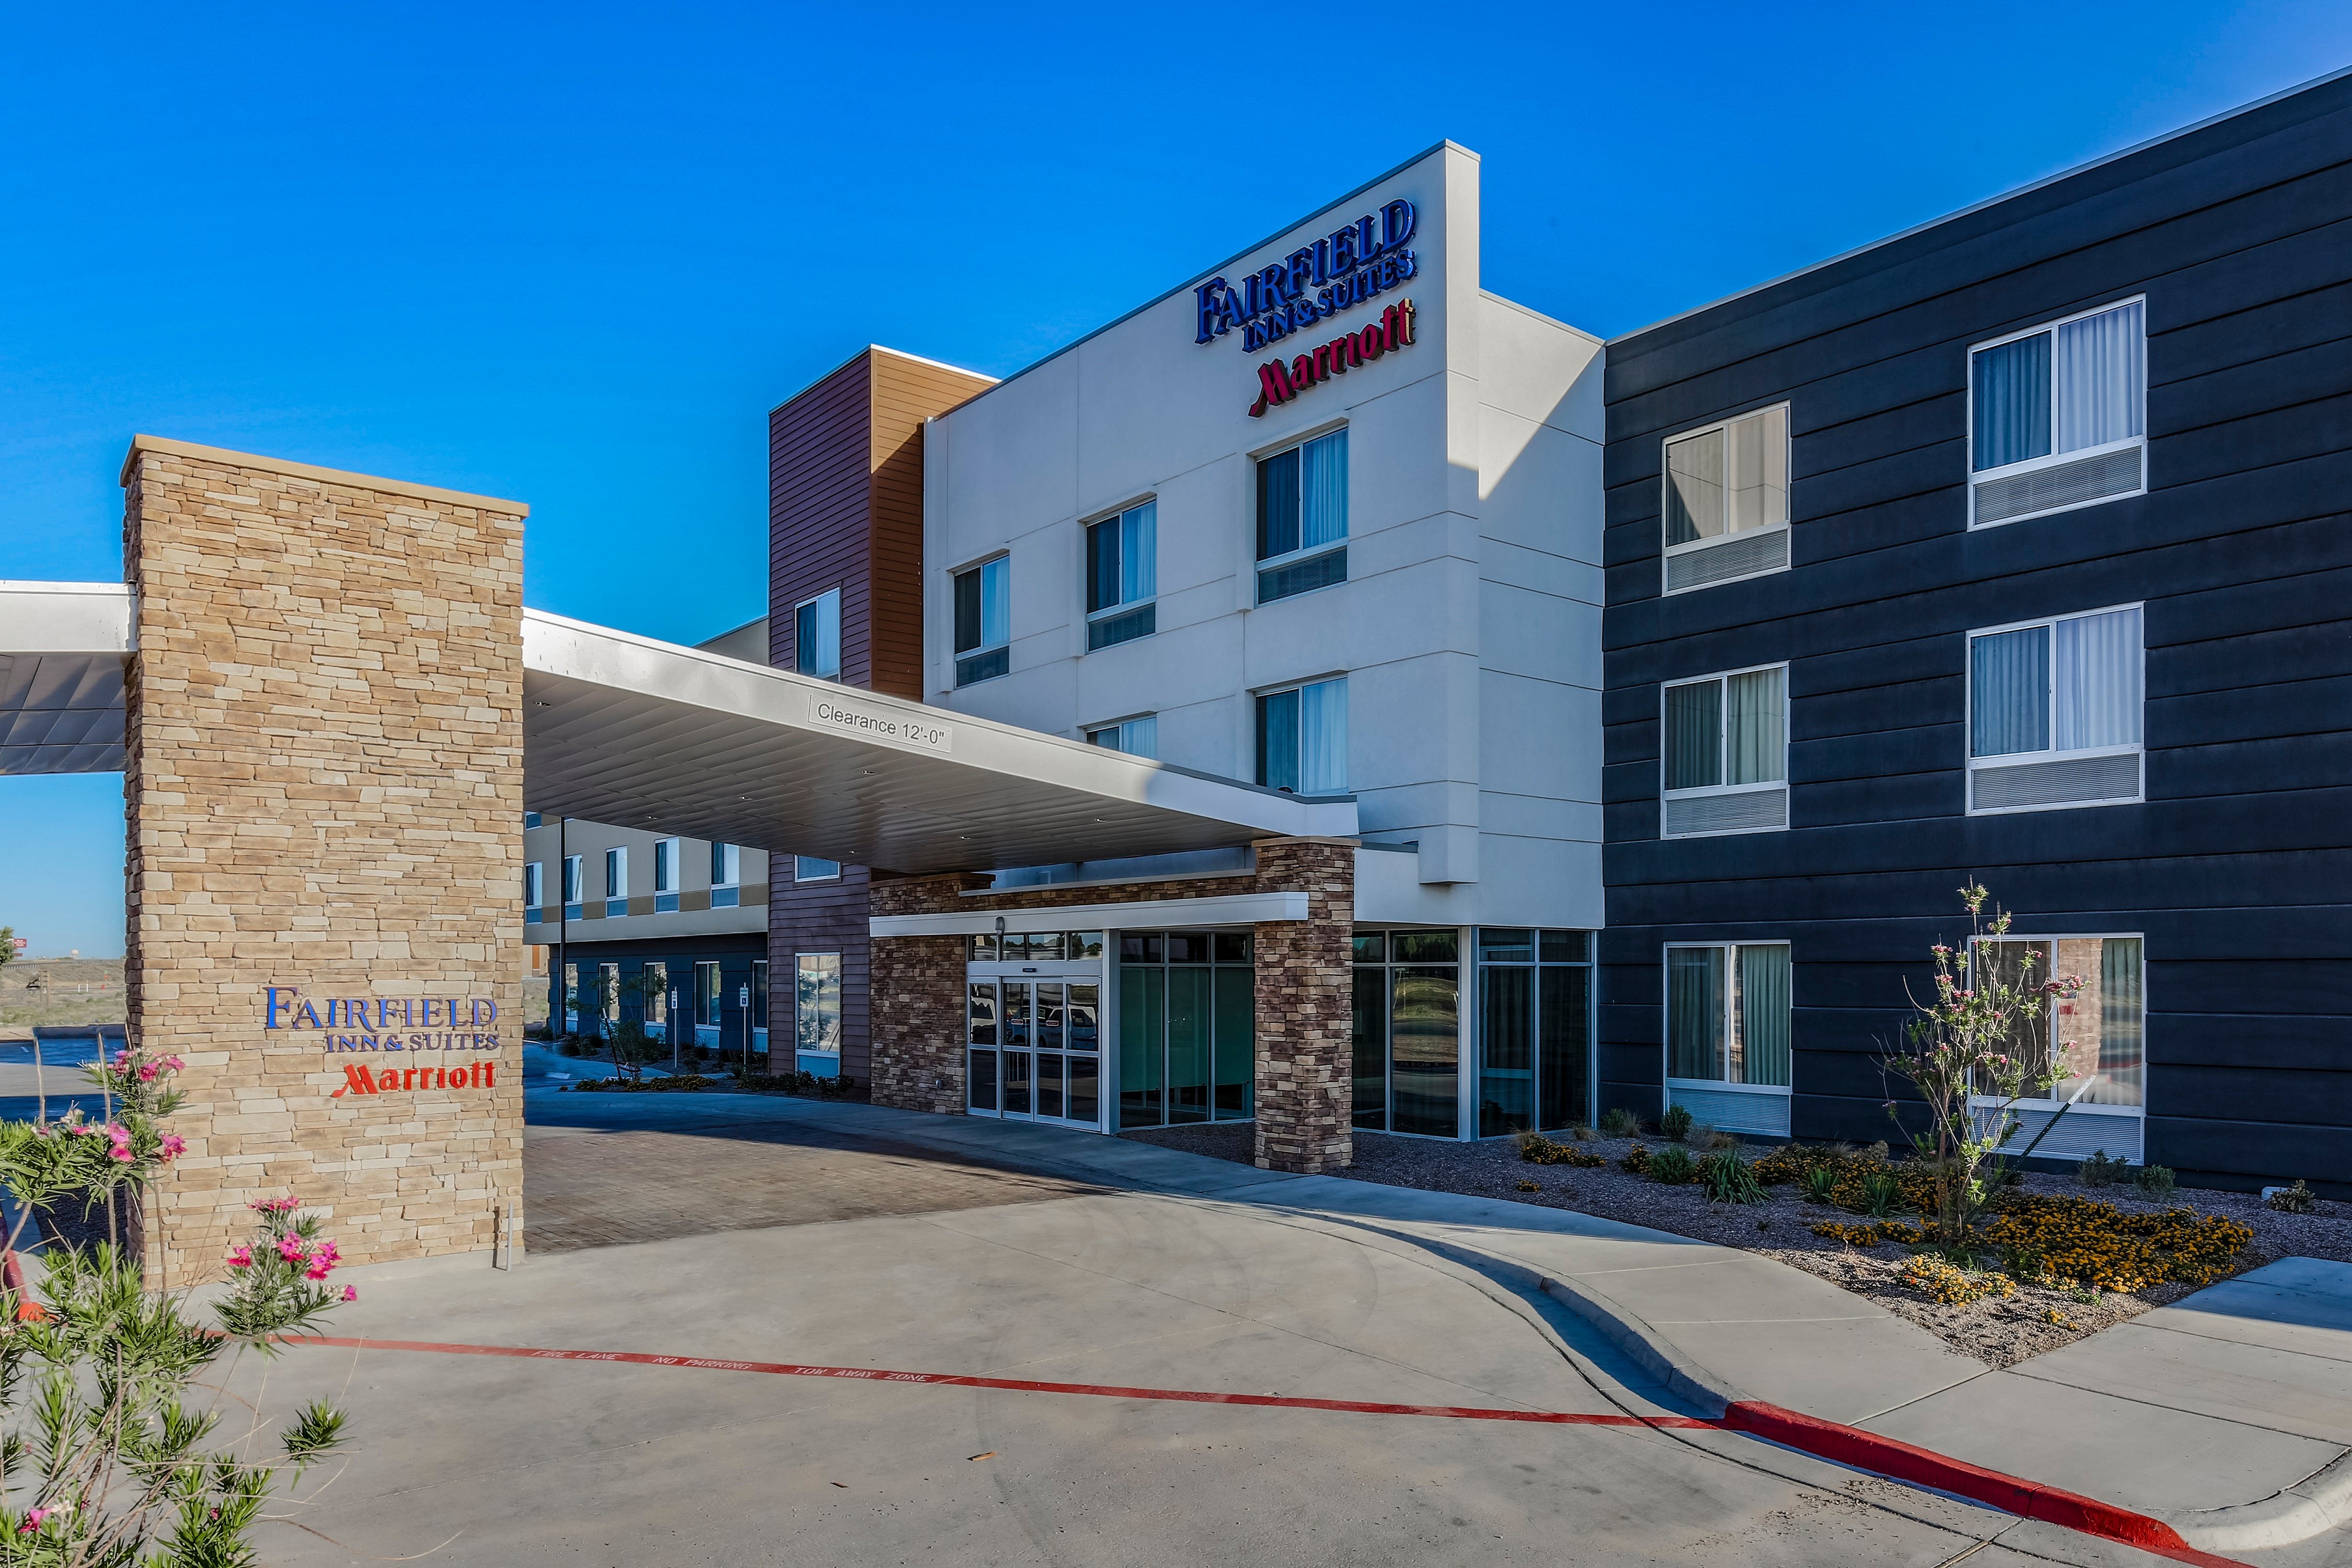 Photo of Fairfield Inn & Suites Pecos, Pecos, TX